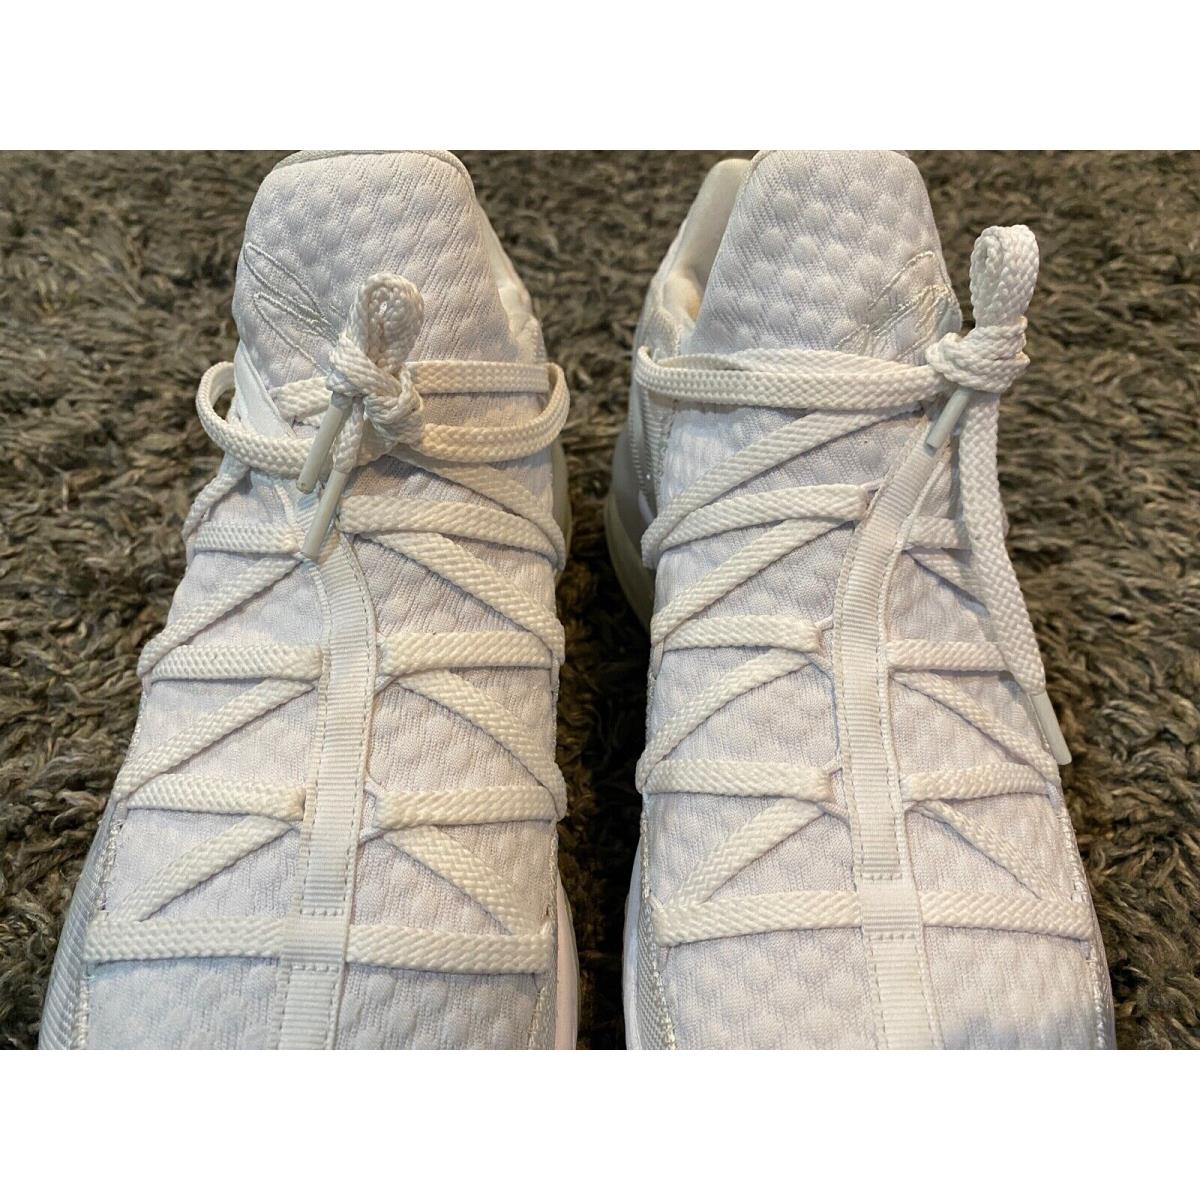 Nike shoes LeBron - White 7